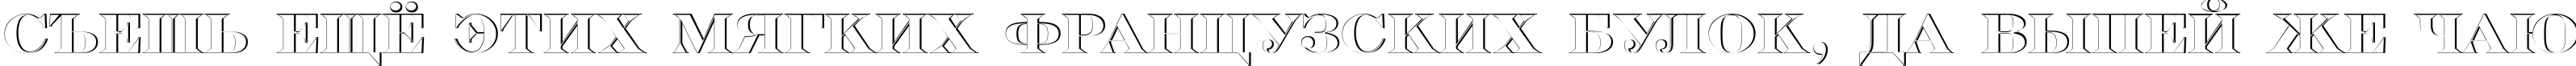 Пример написания шрифтом a_SeriferTitulSh текста на русском